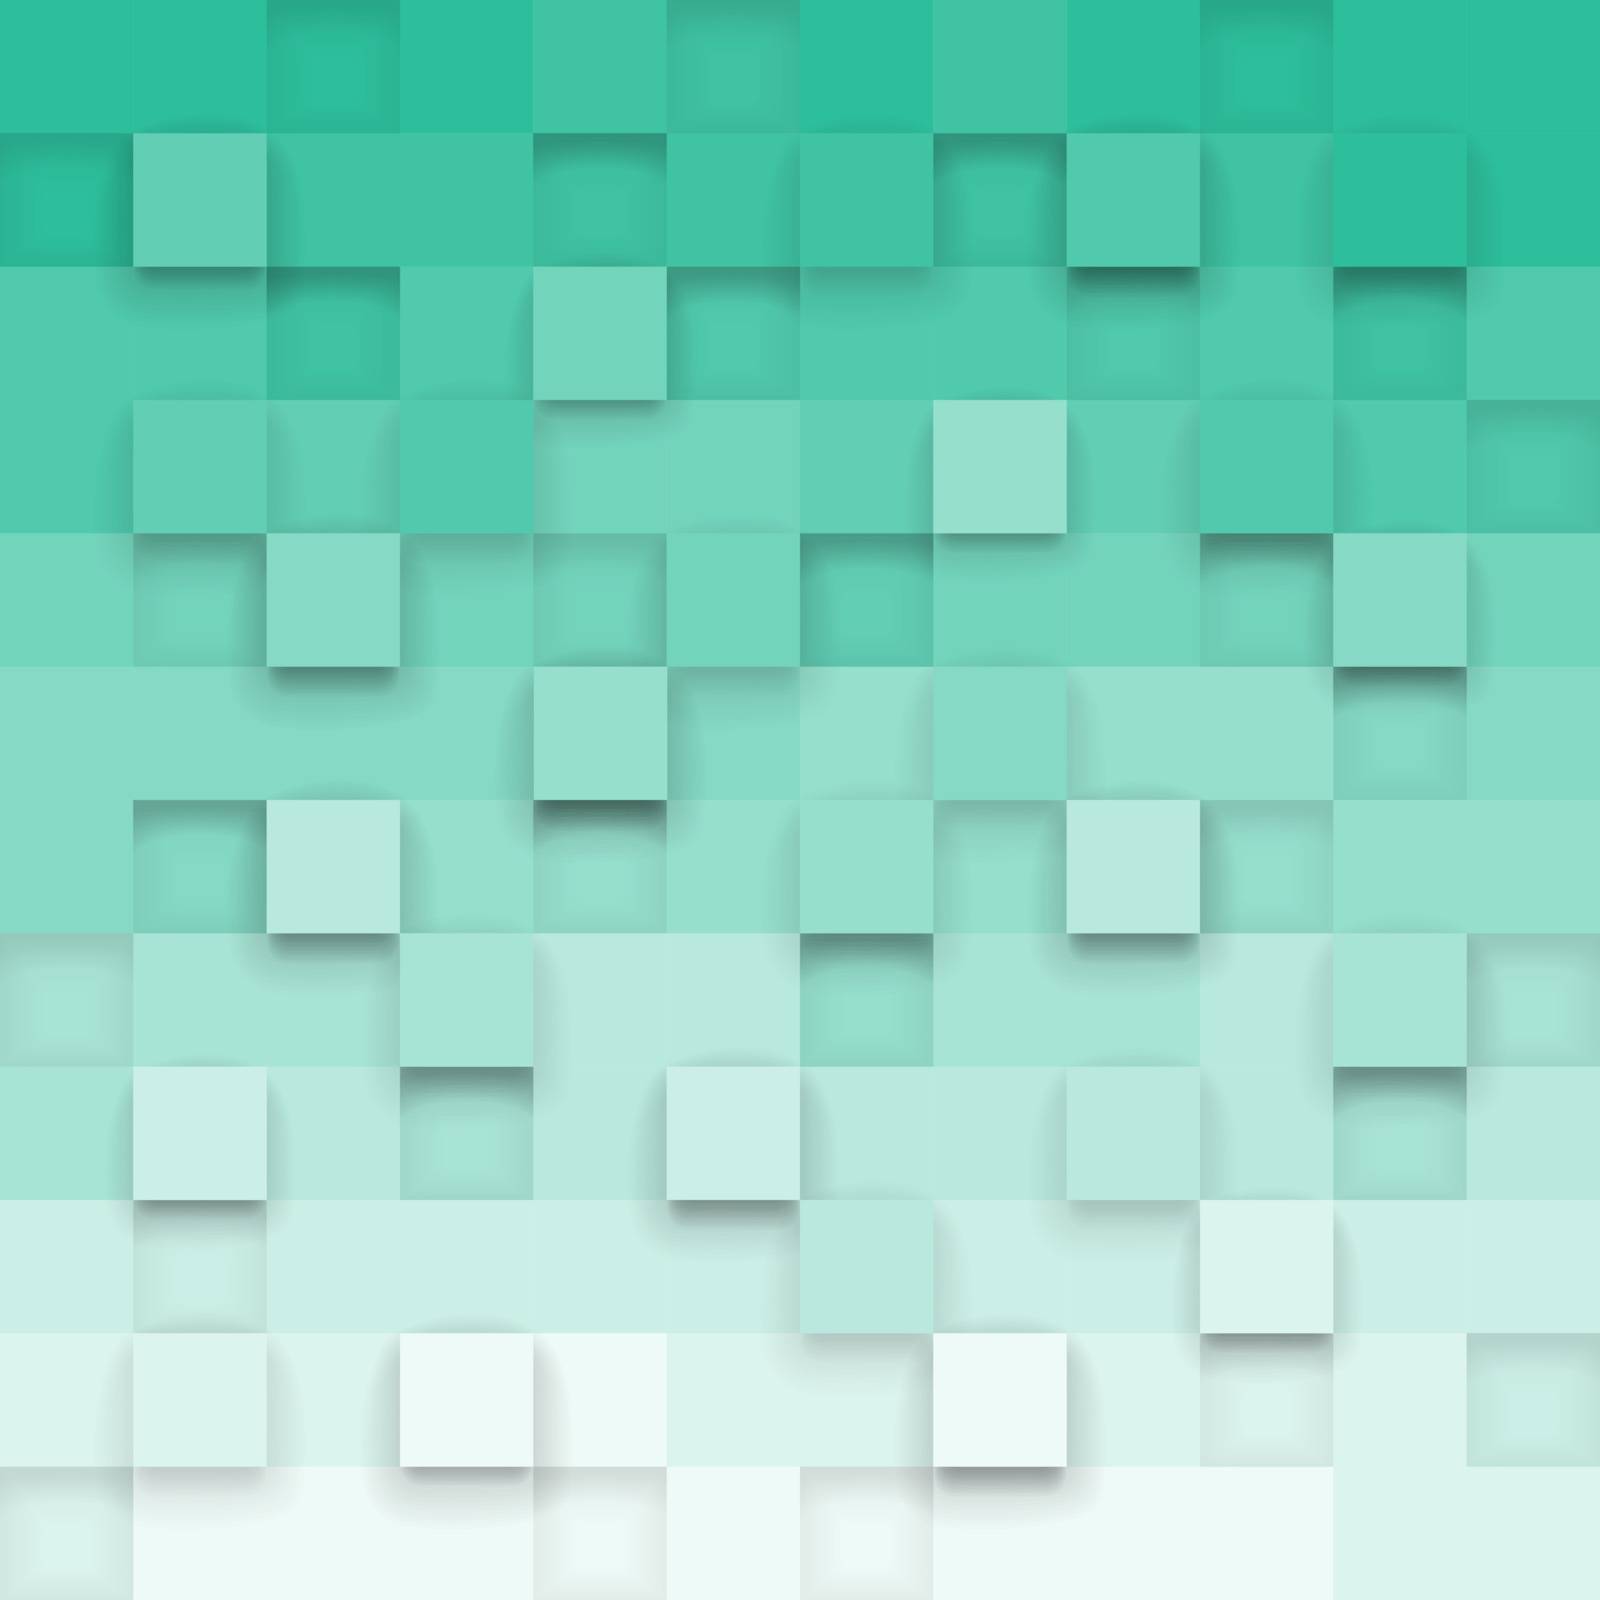 Geometric background with 3d cubes by ildogesto